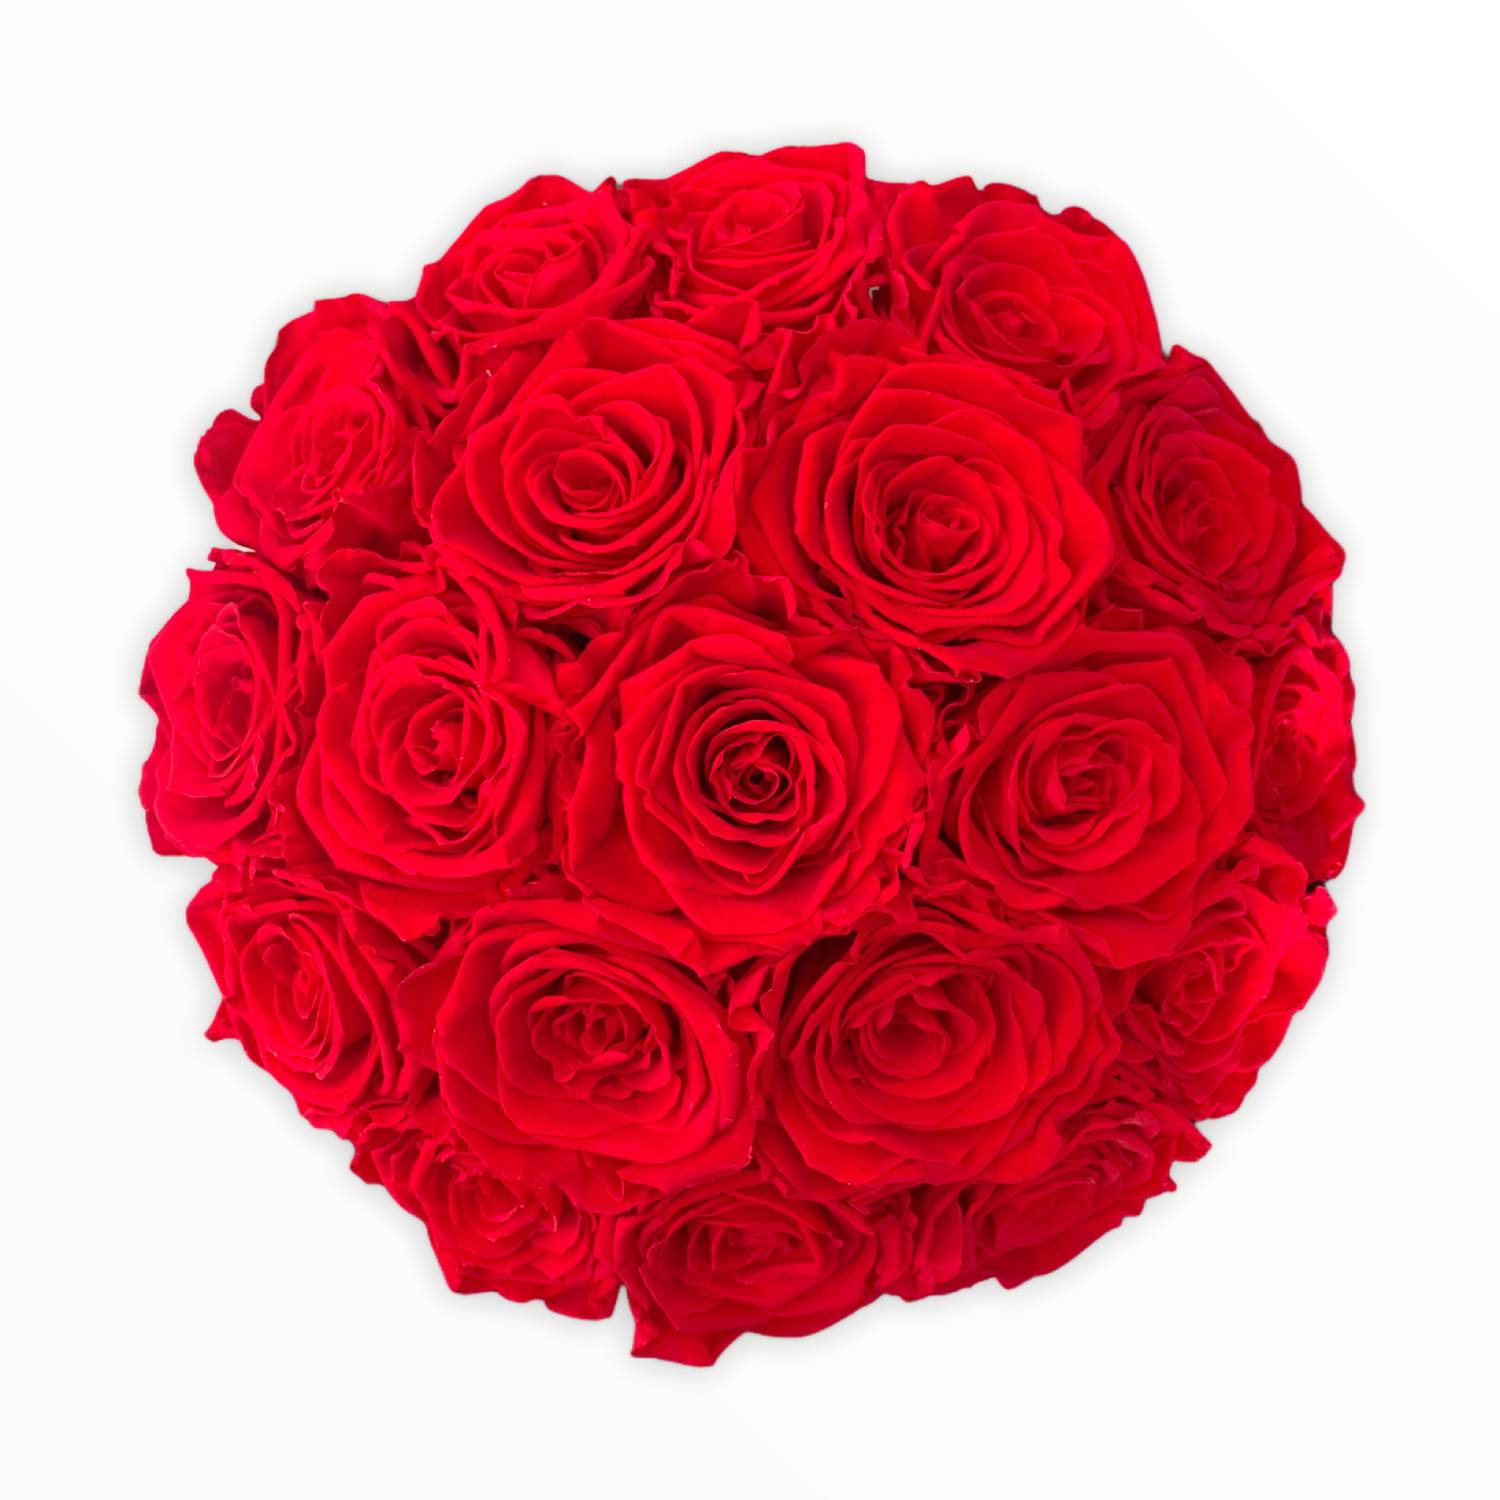 Konservierte Rosen Velvet Box XL kaufen Ena Ray Online-Blumenladen ᐅ ...